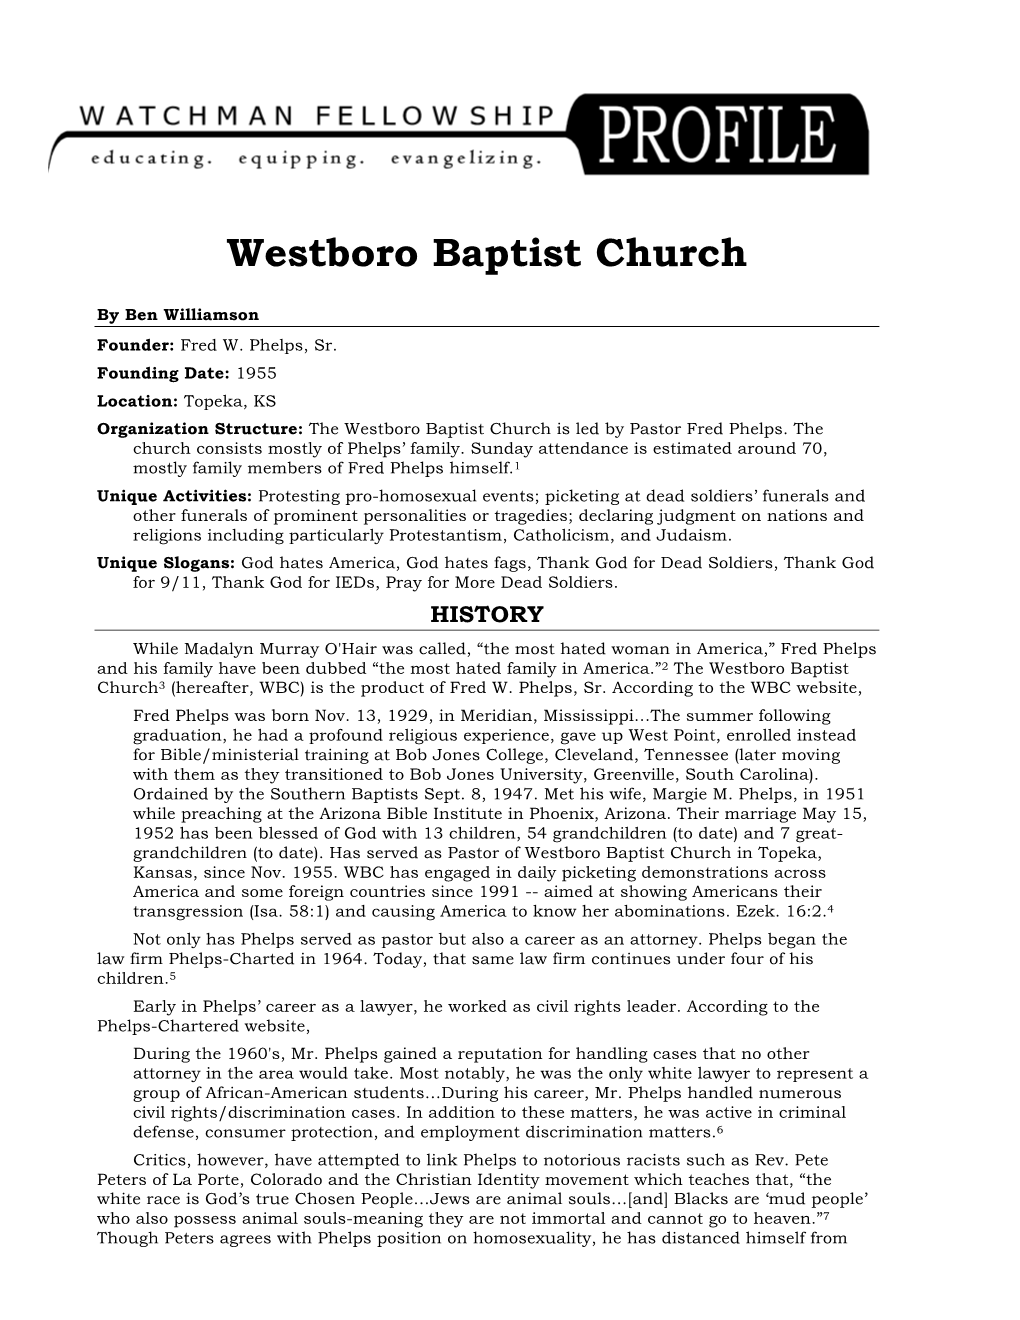 Westboro Baptist Church Profile